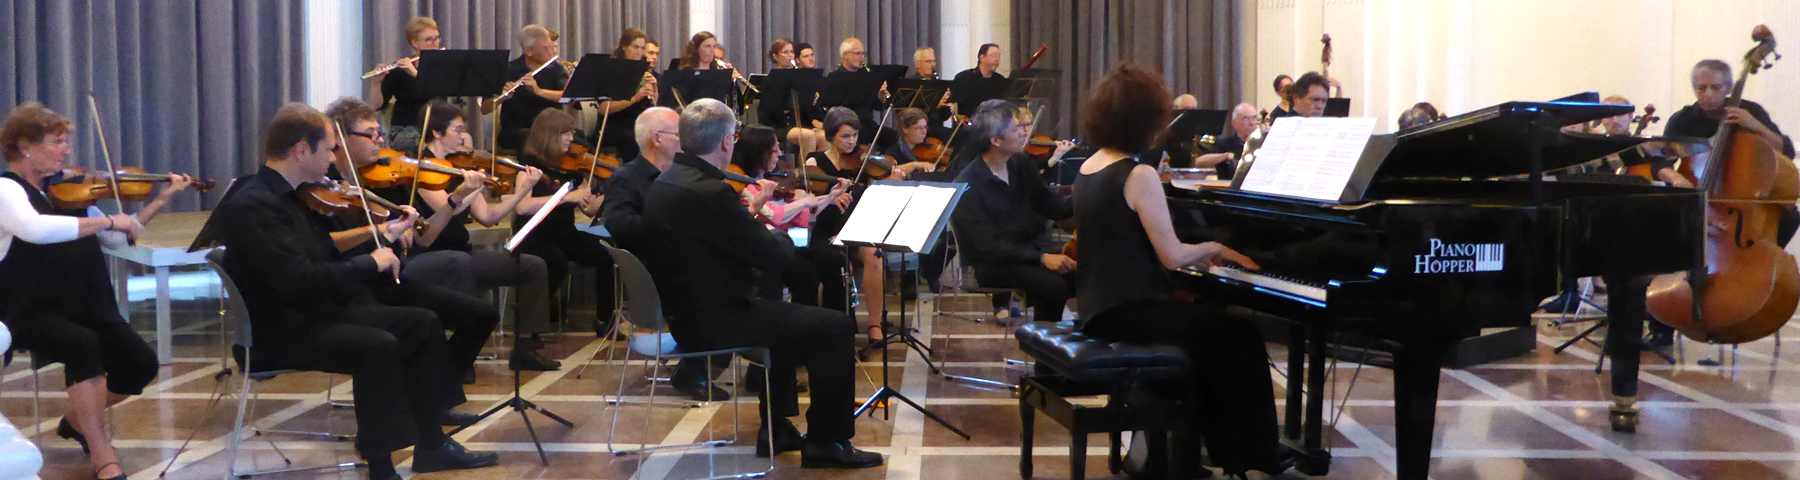 Neues Orchester Aachen